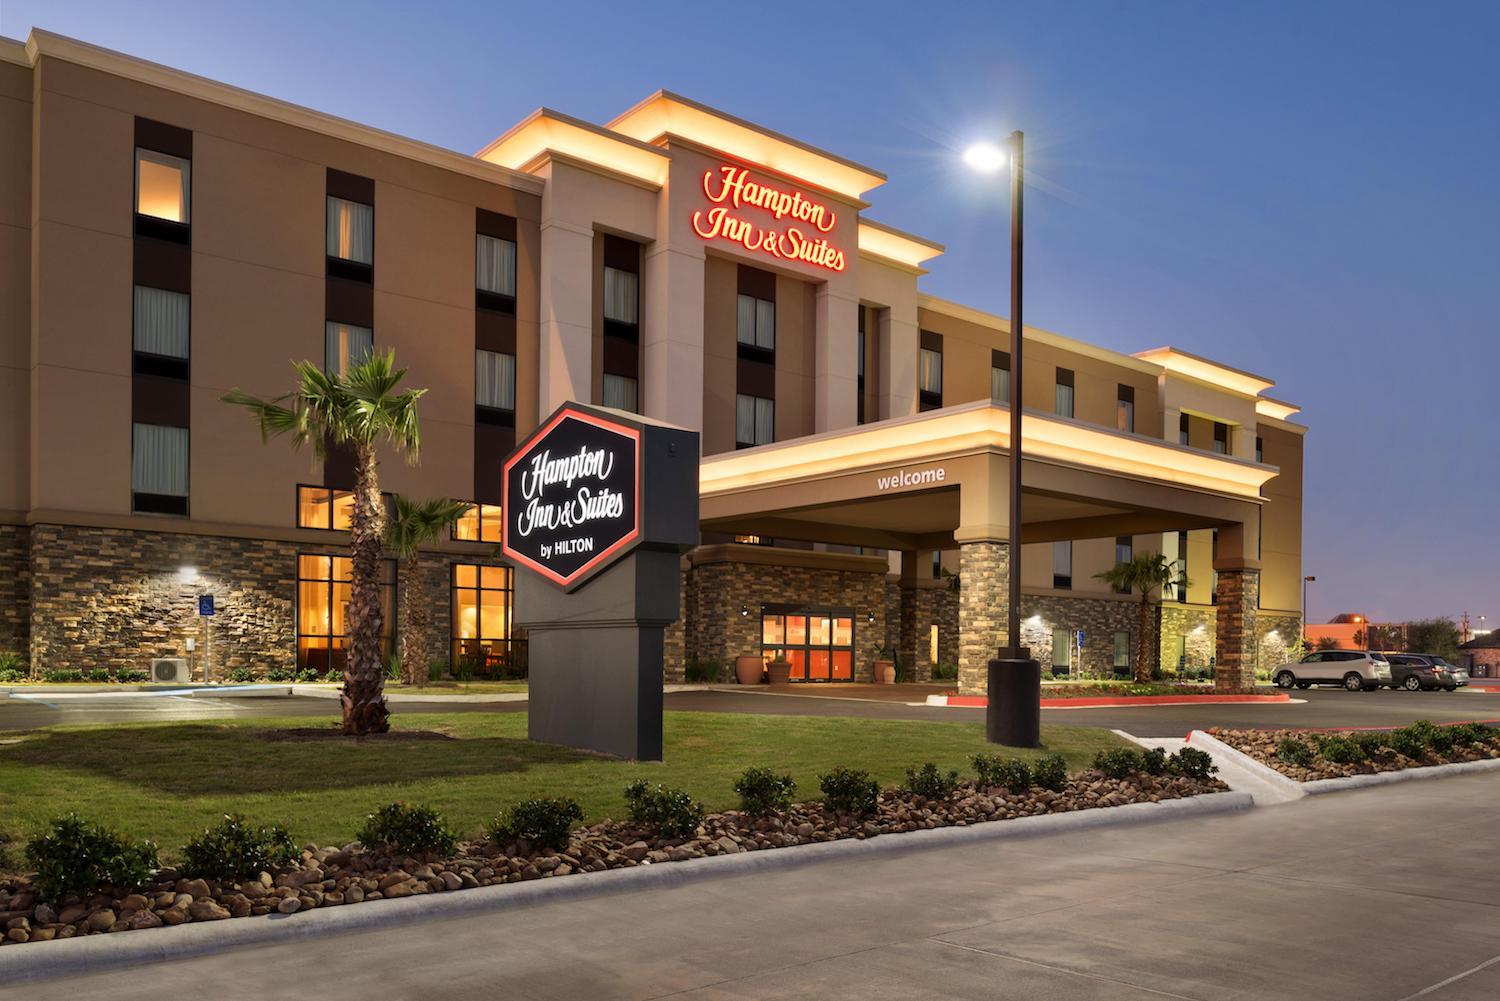 Photo of Hampton Inn & Suites Corpus Christi, Corpus Christi, TX